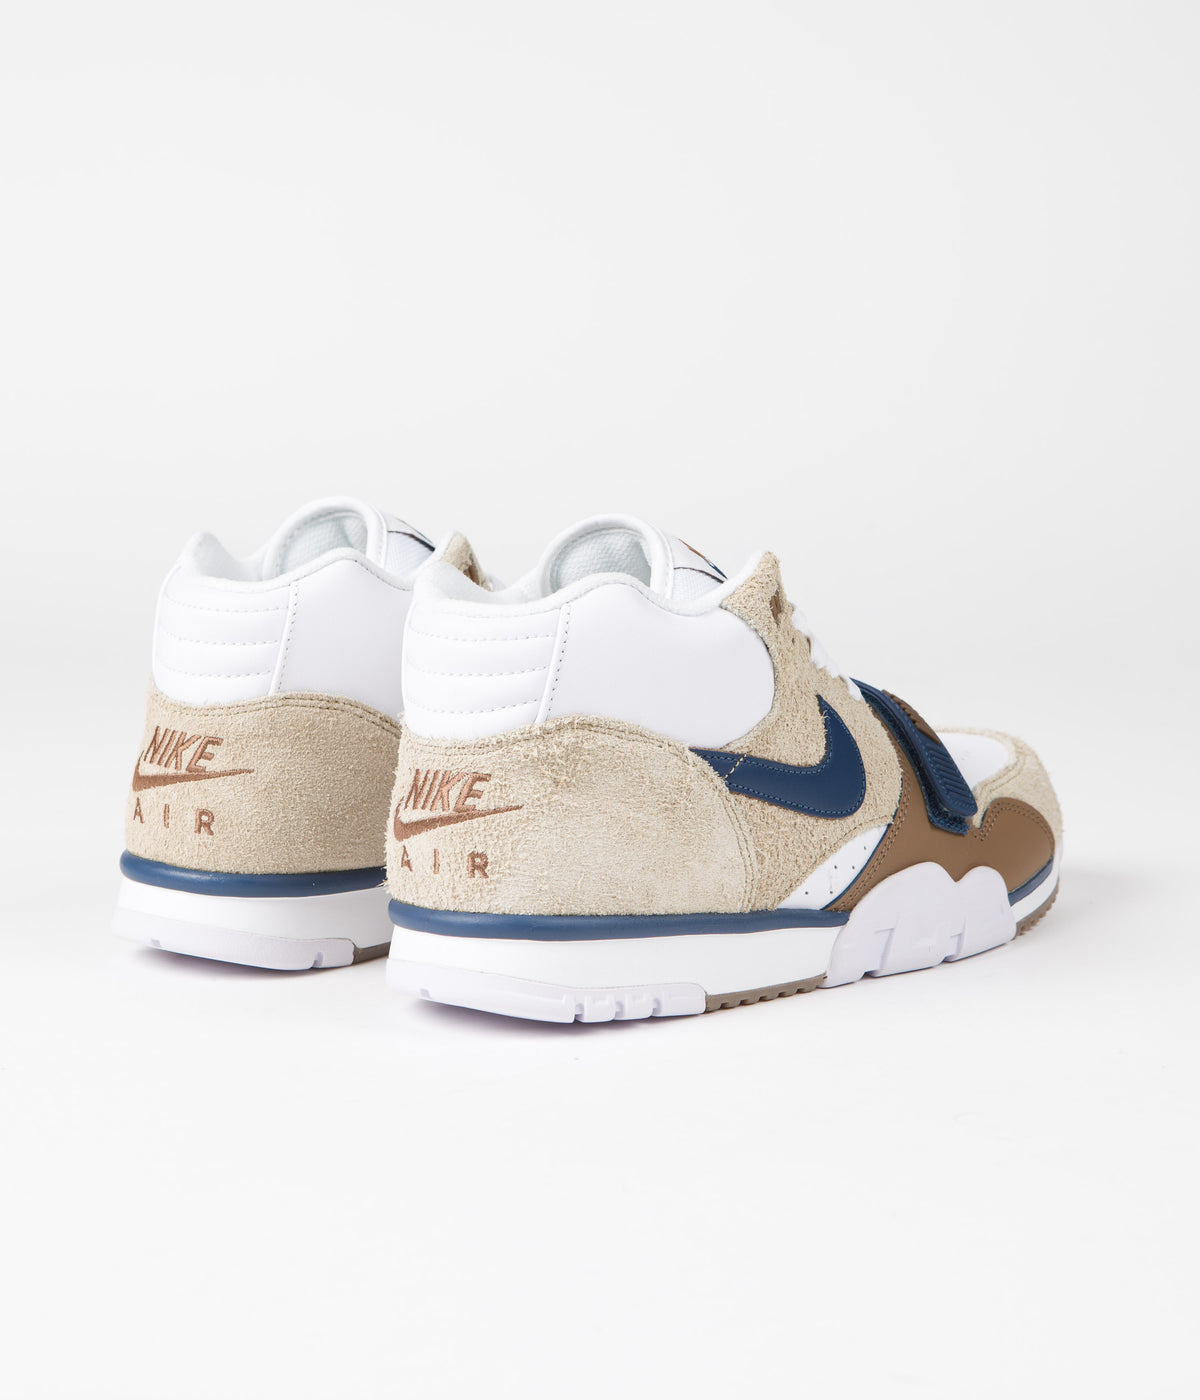 Nike Air Trainer 1 Shoes - Limestone / Valerian Blue - Ale Brown